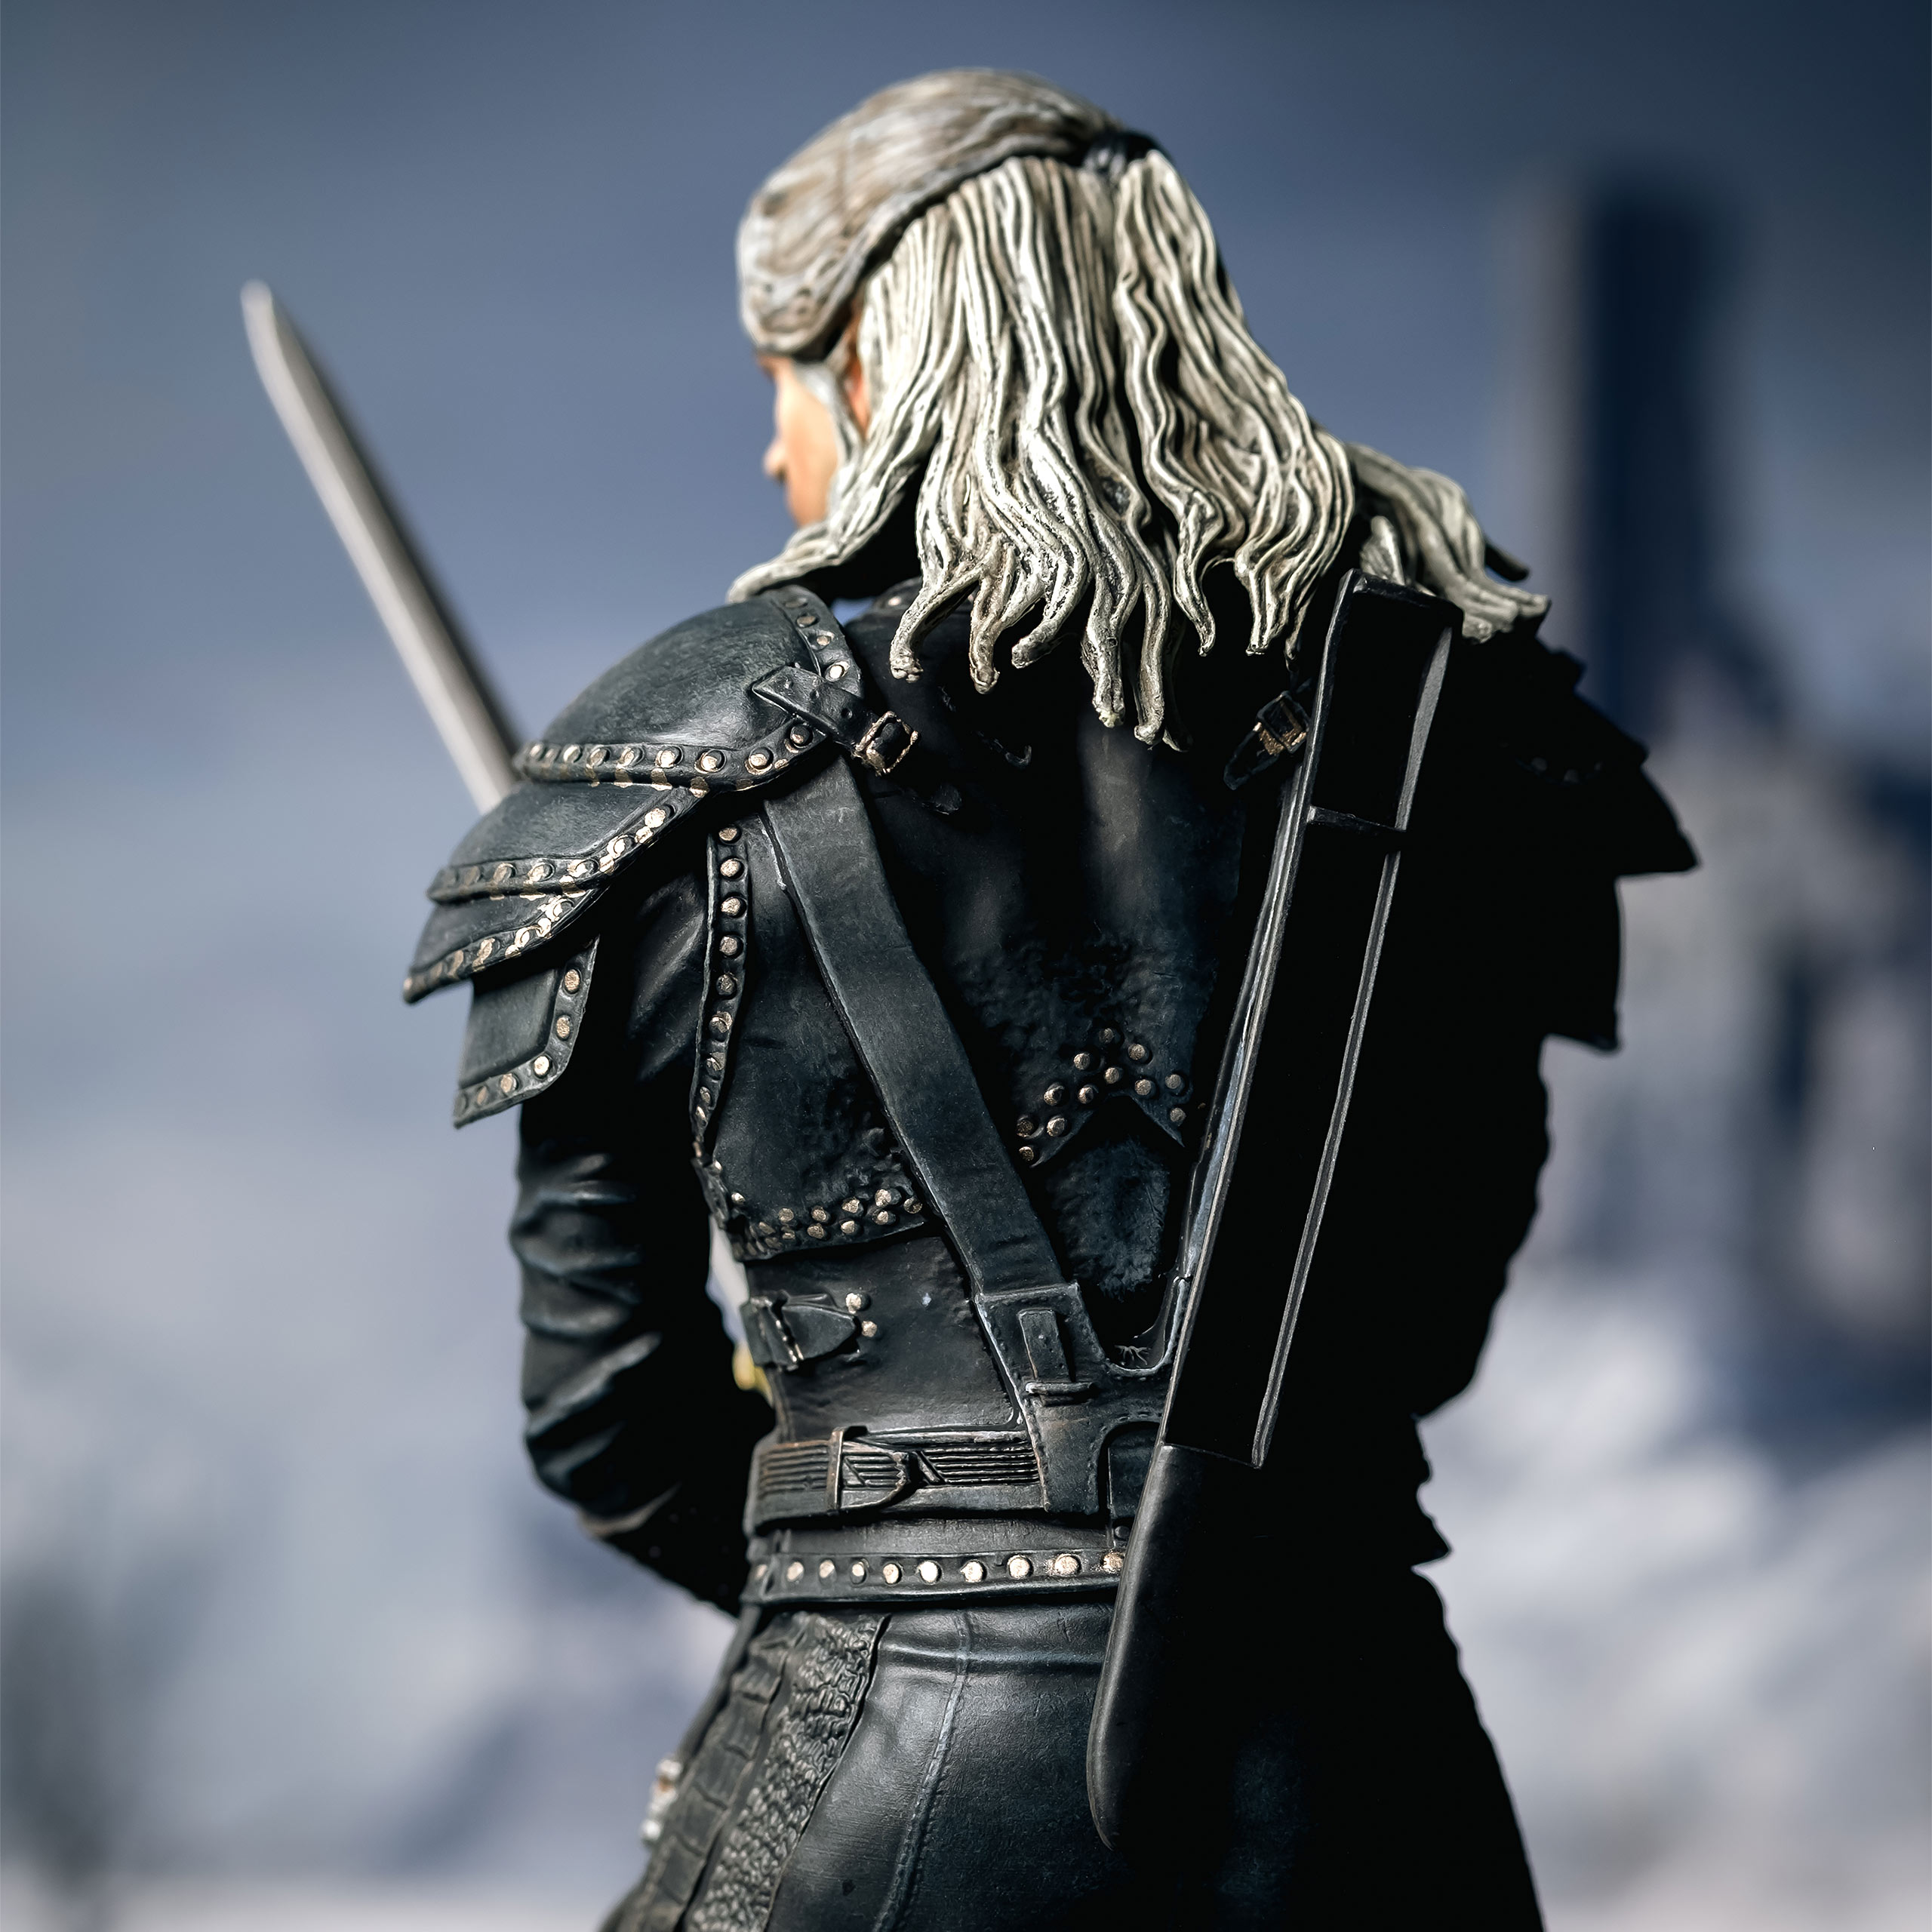 Witcher - Geralt Seizoen 2 Standbeeld